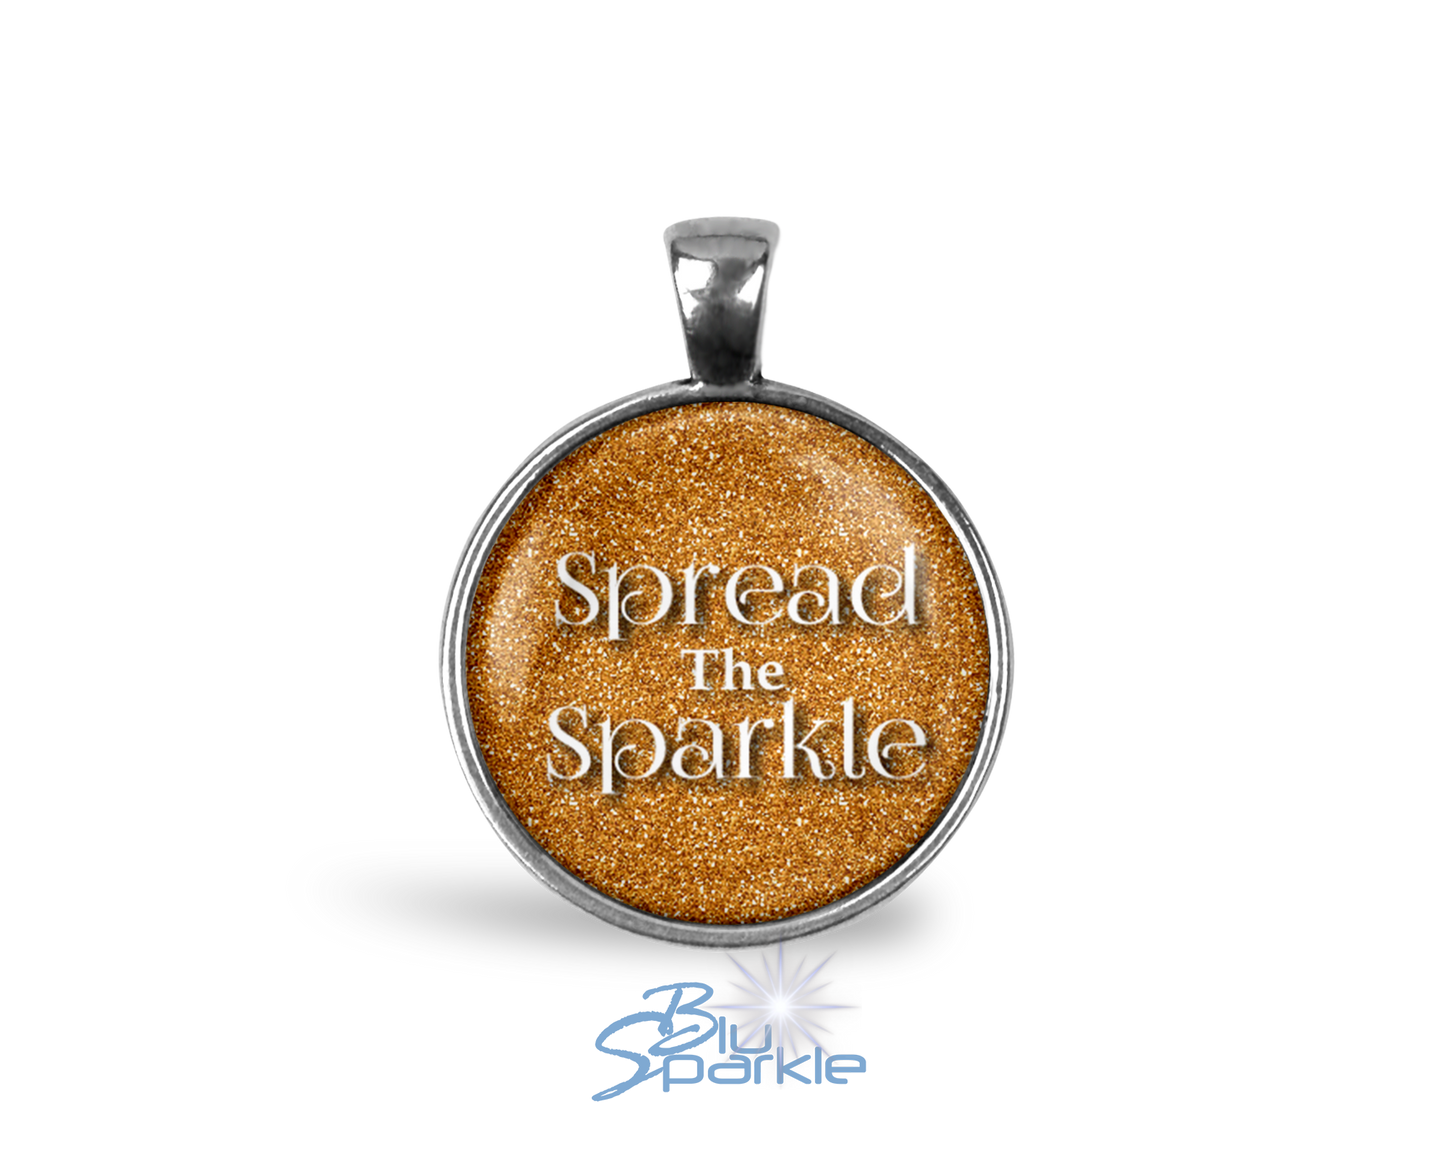 Silver "Spread The Sparkle" Round Pendants